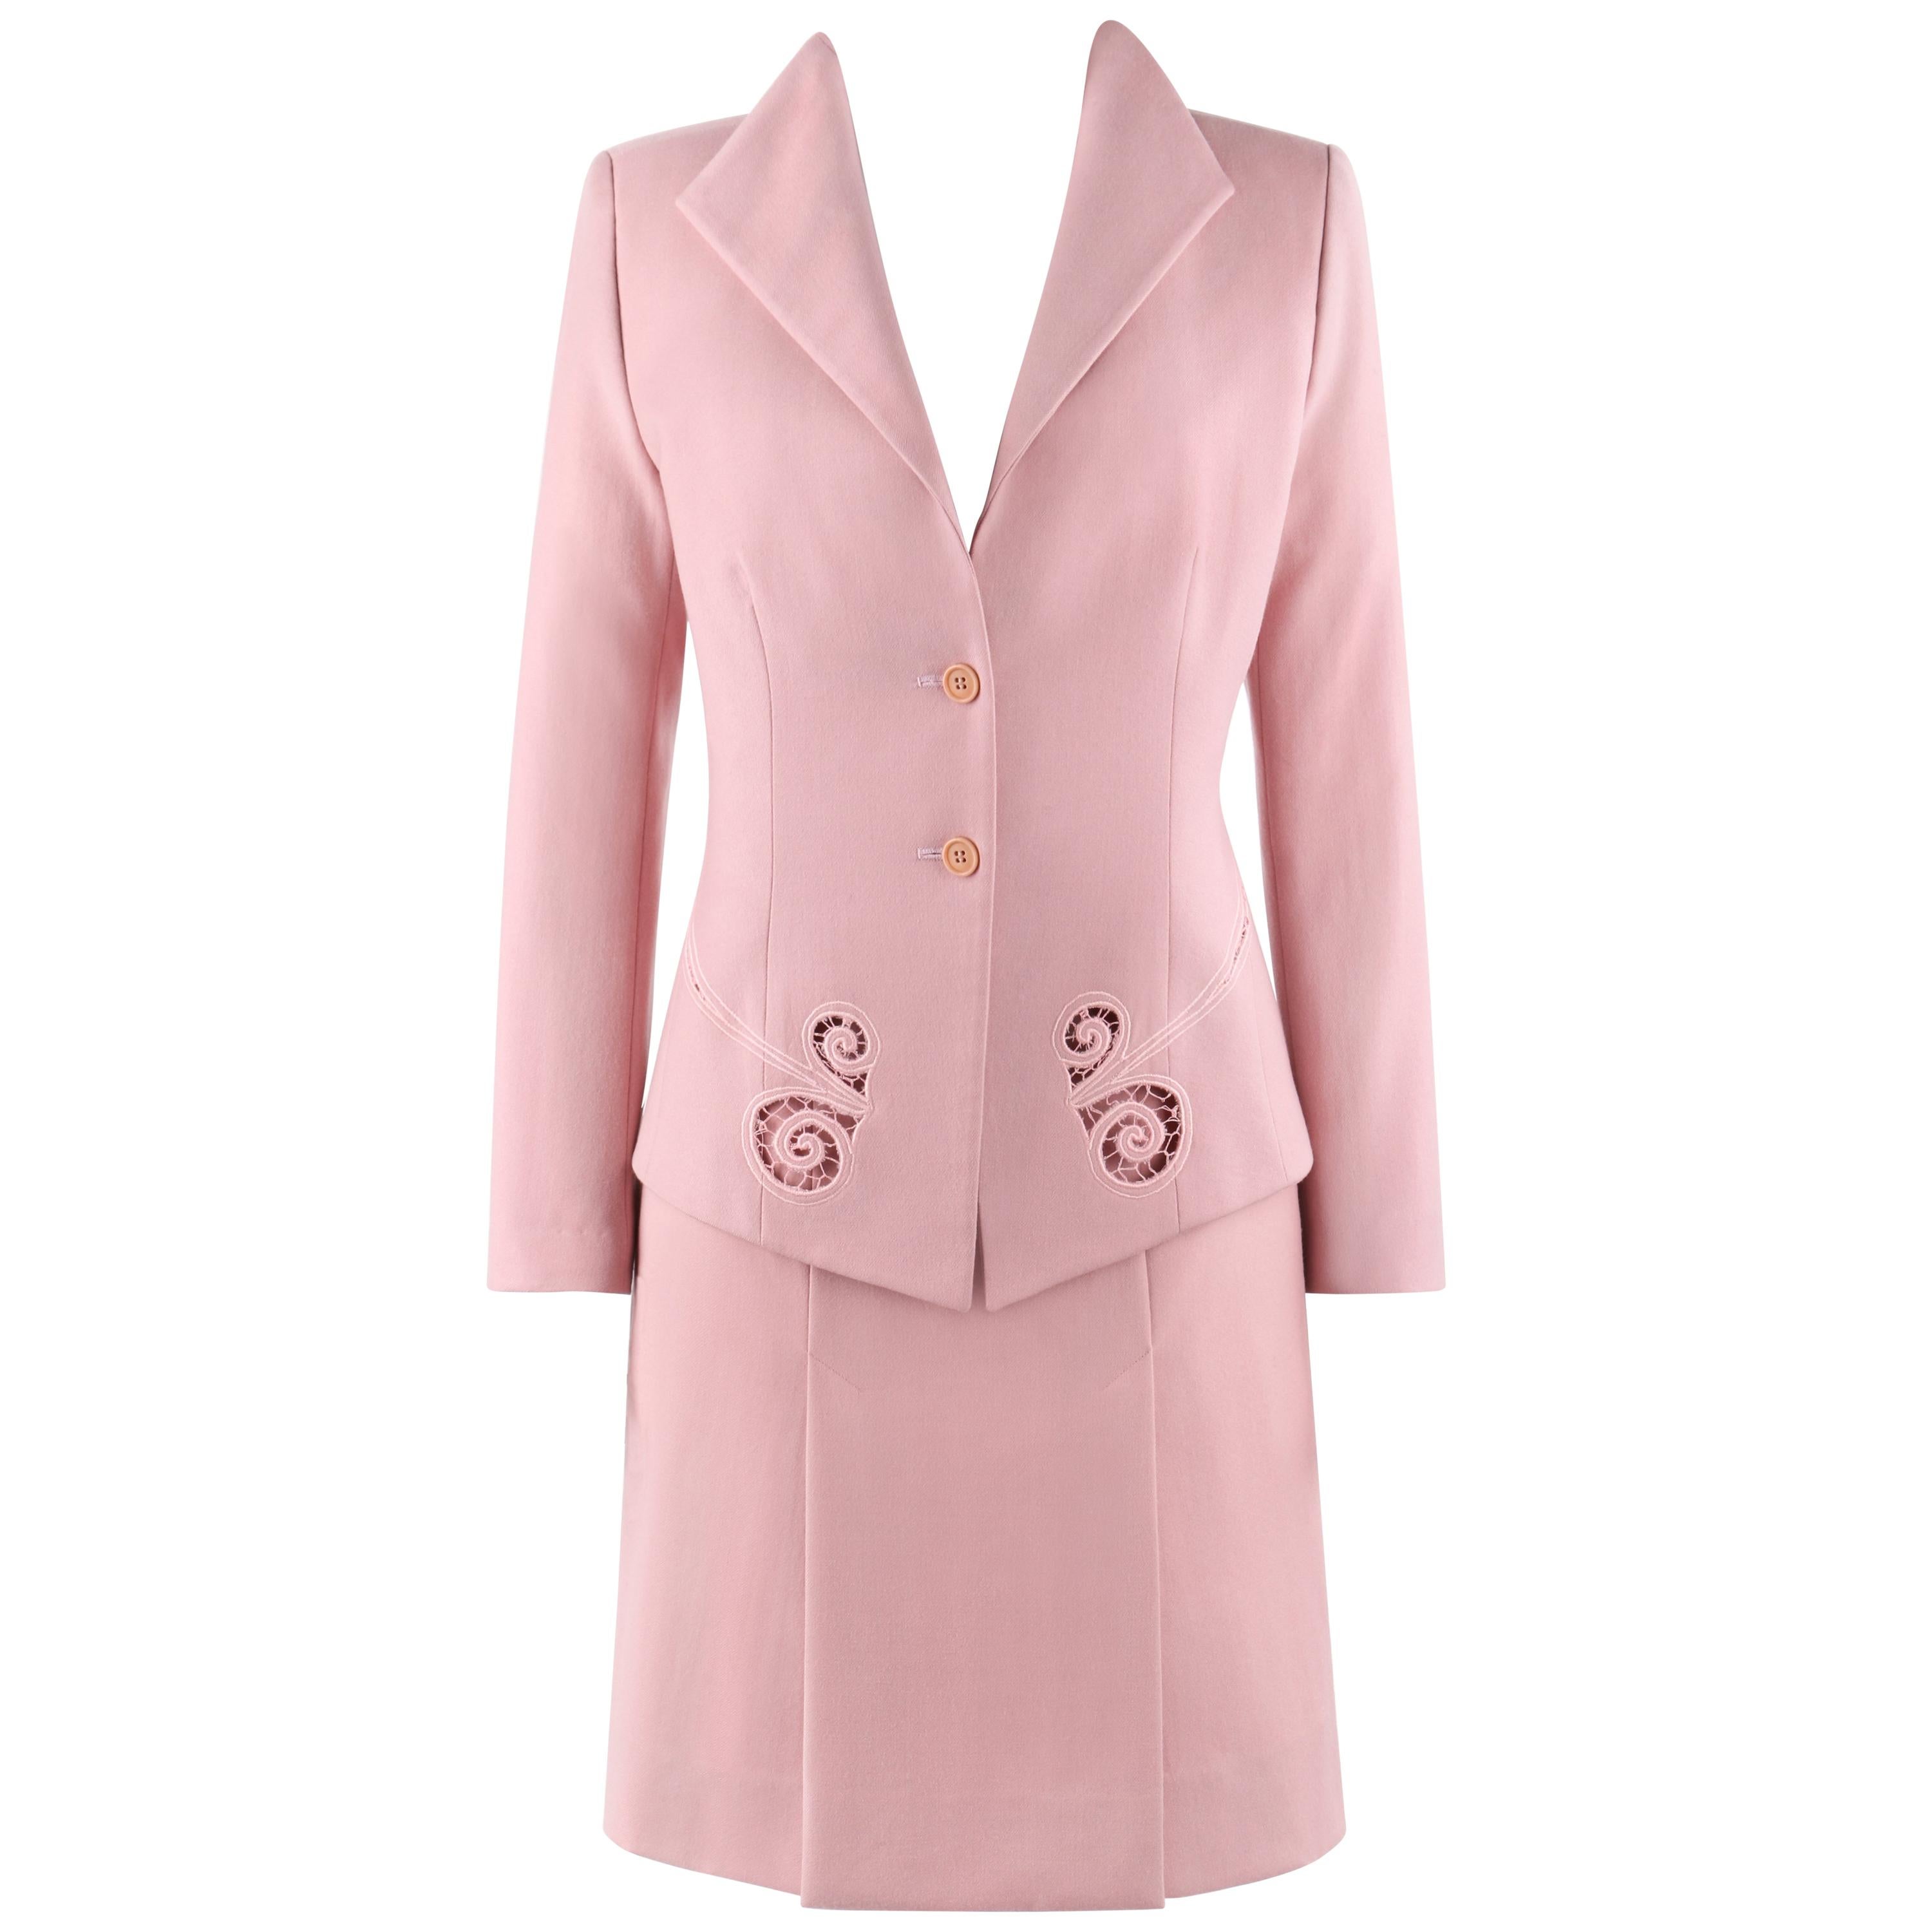 ALEXANDER McQUEEN S/S 1999 "No. 13" 2 Pc Pink Cut Work Blazer Skirt Suit Set For Sale